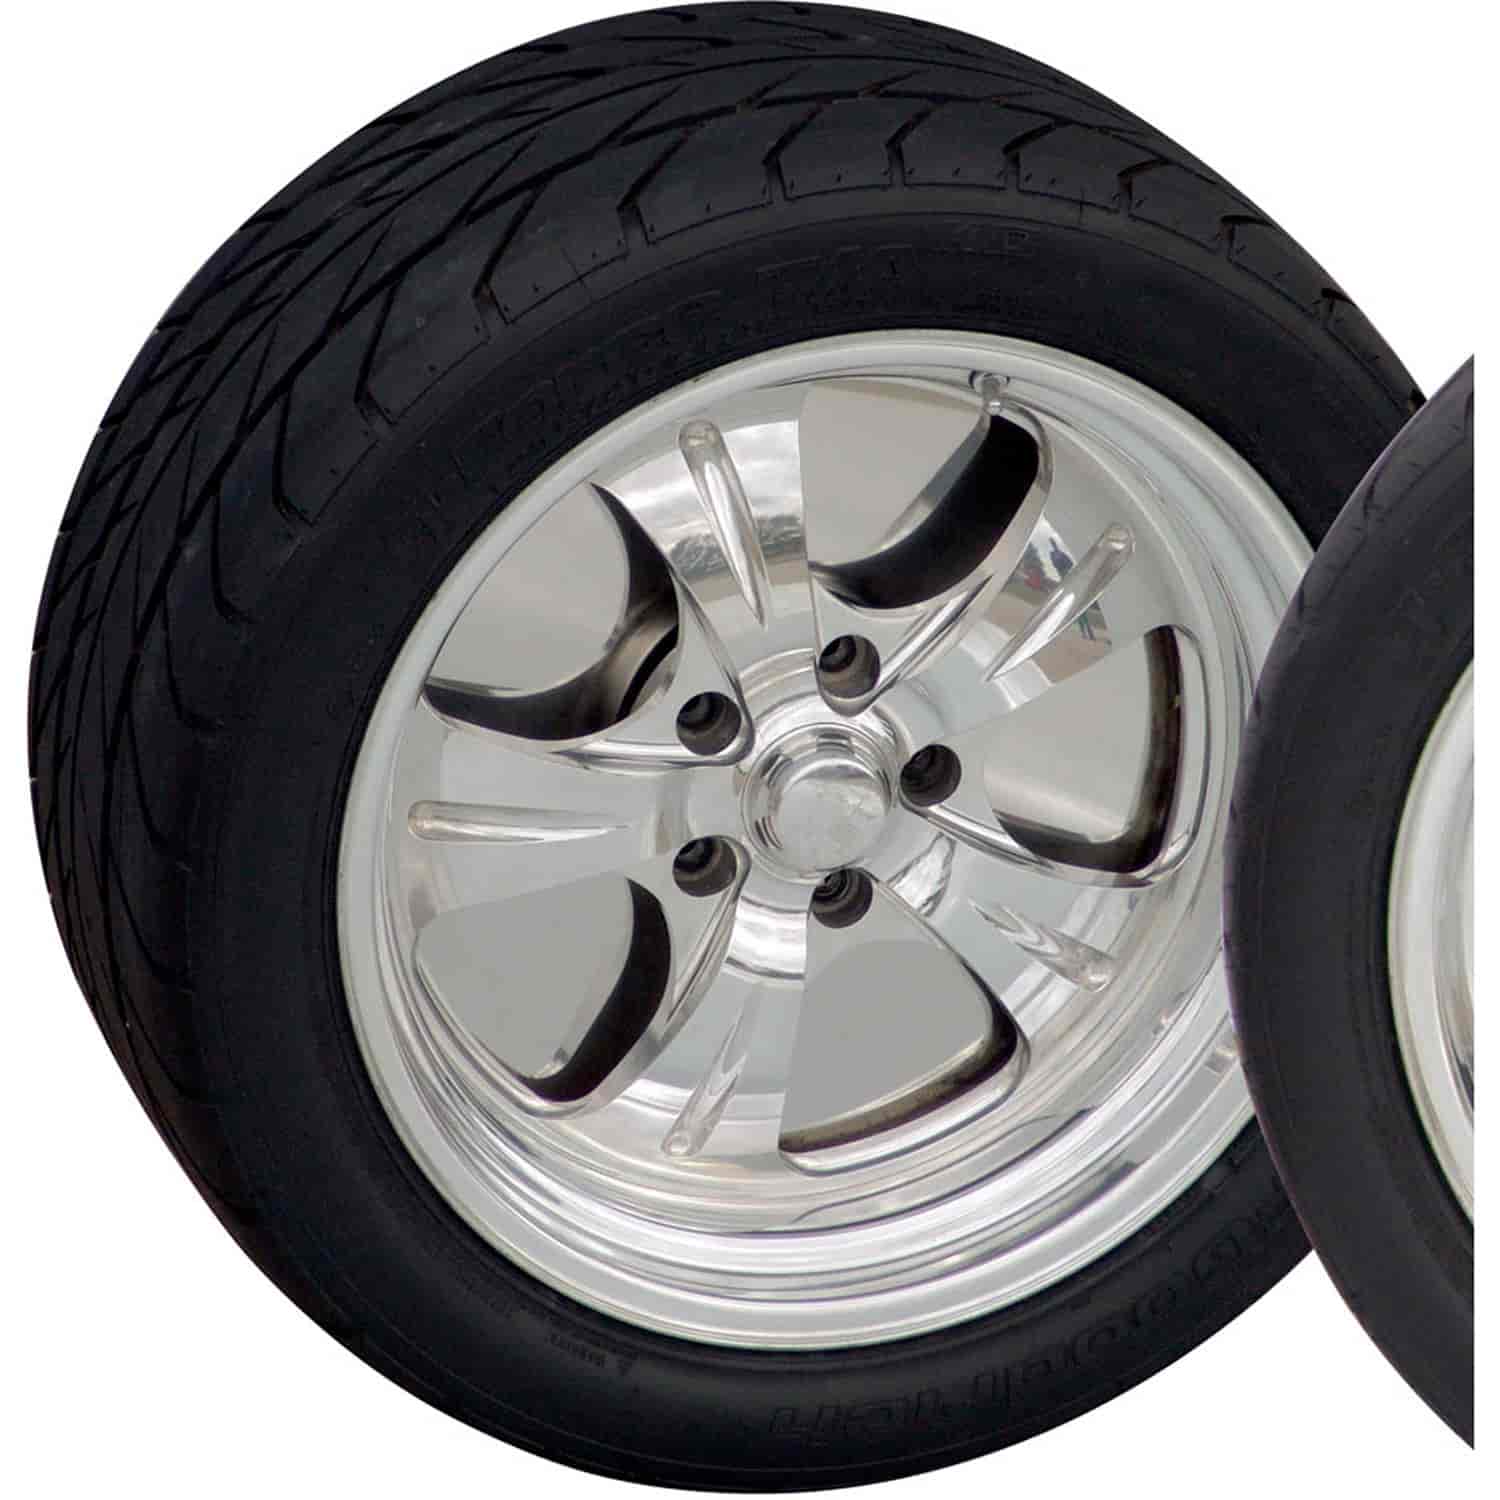 Wheelplate - Brake Dust Shield Fits 16 in. Wheel Diameter